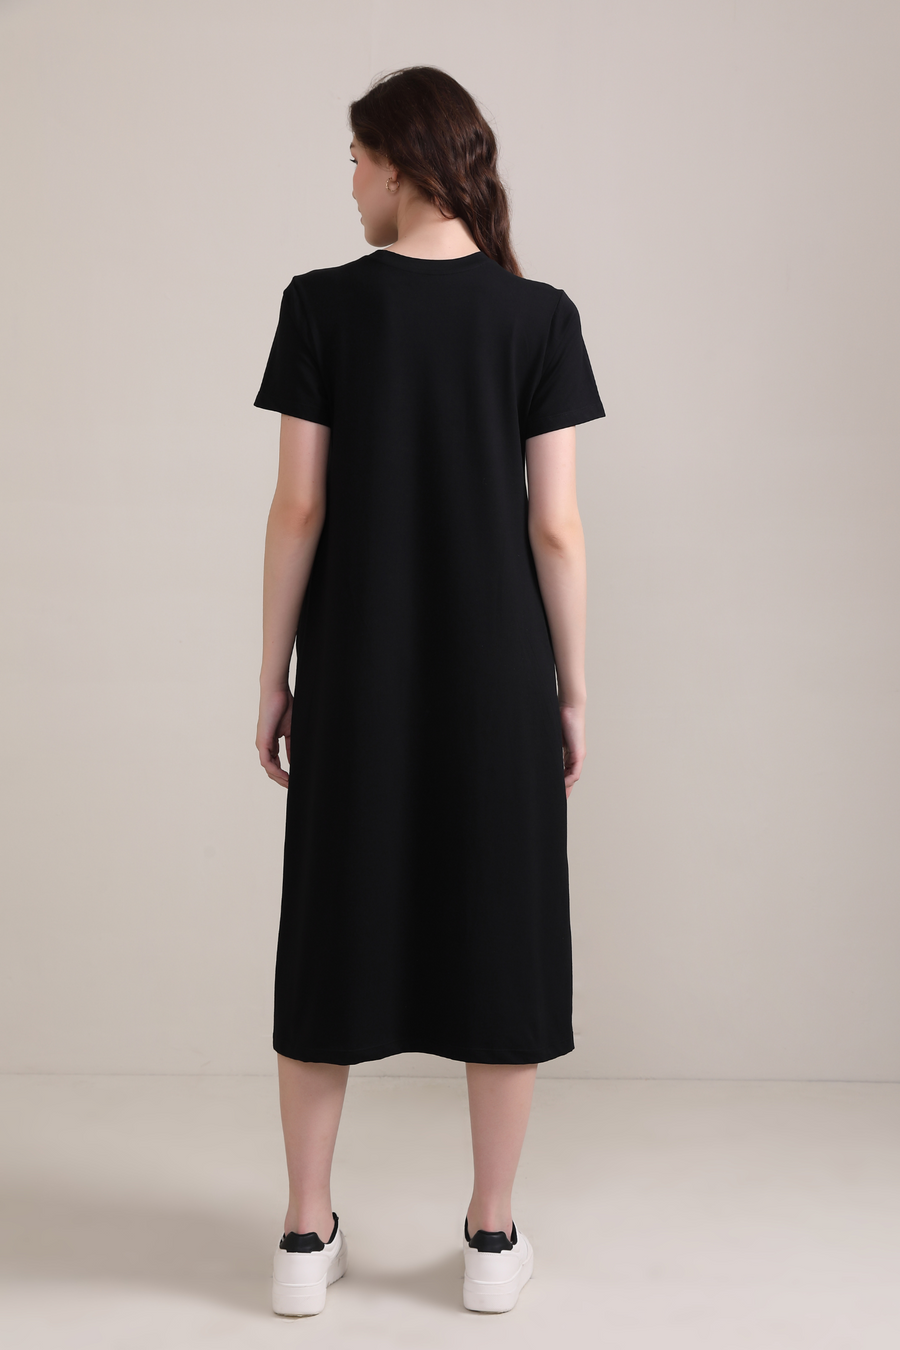 Cotton A line Short Sleeve Dress-Black